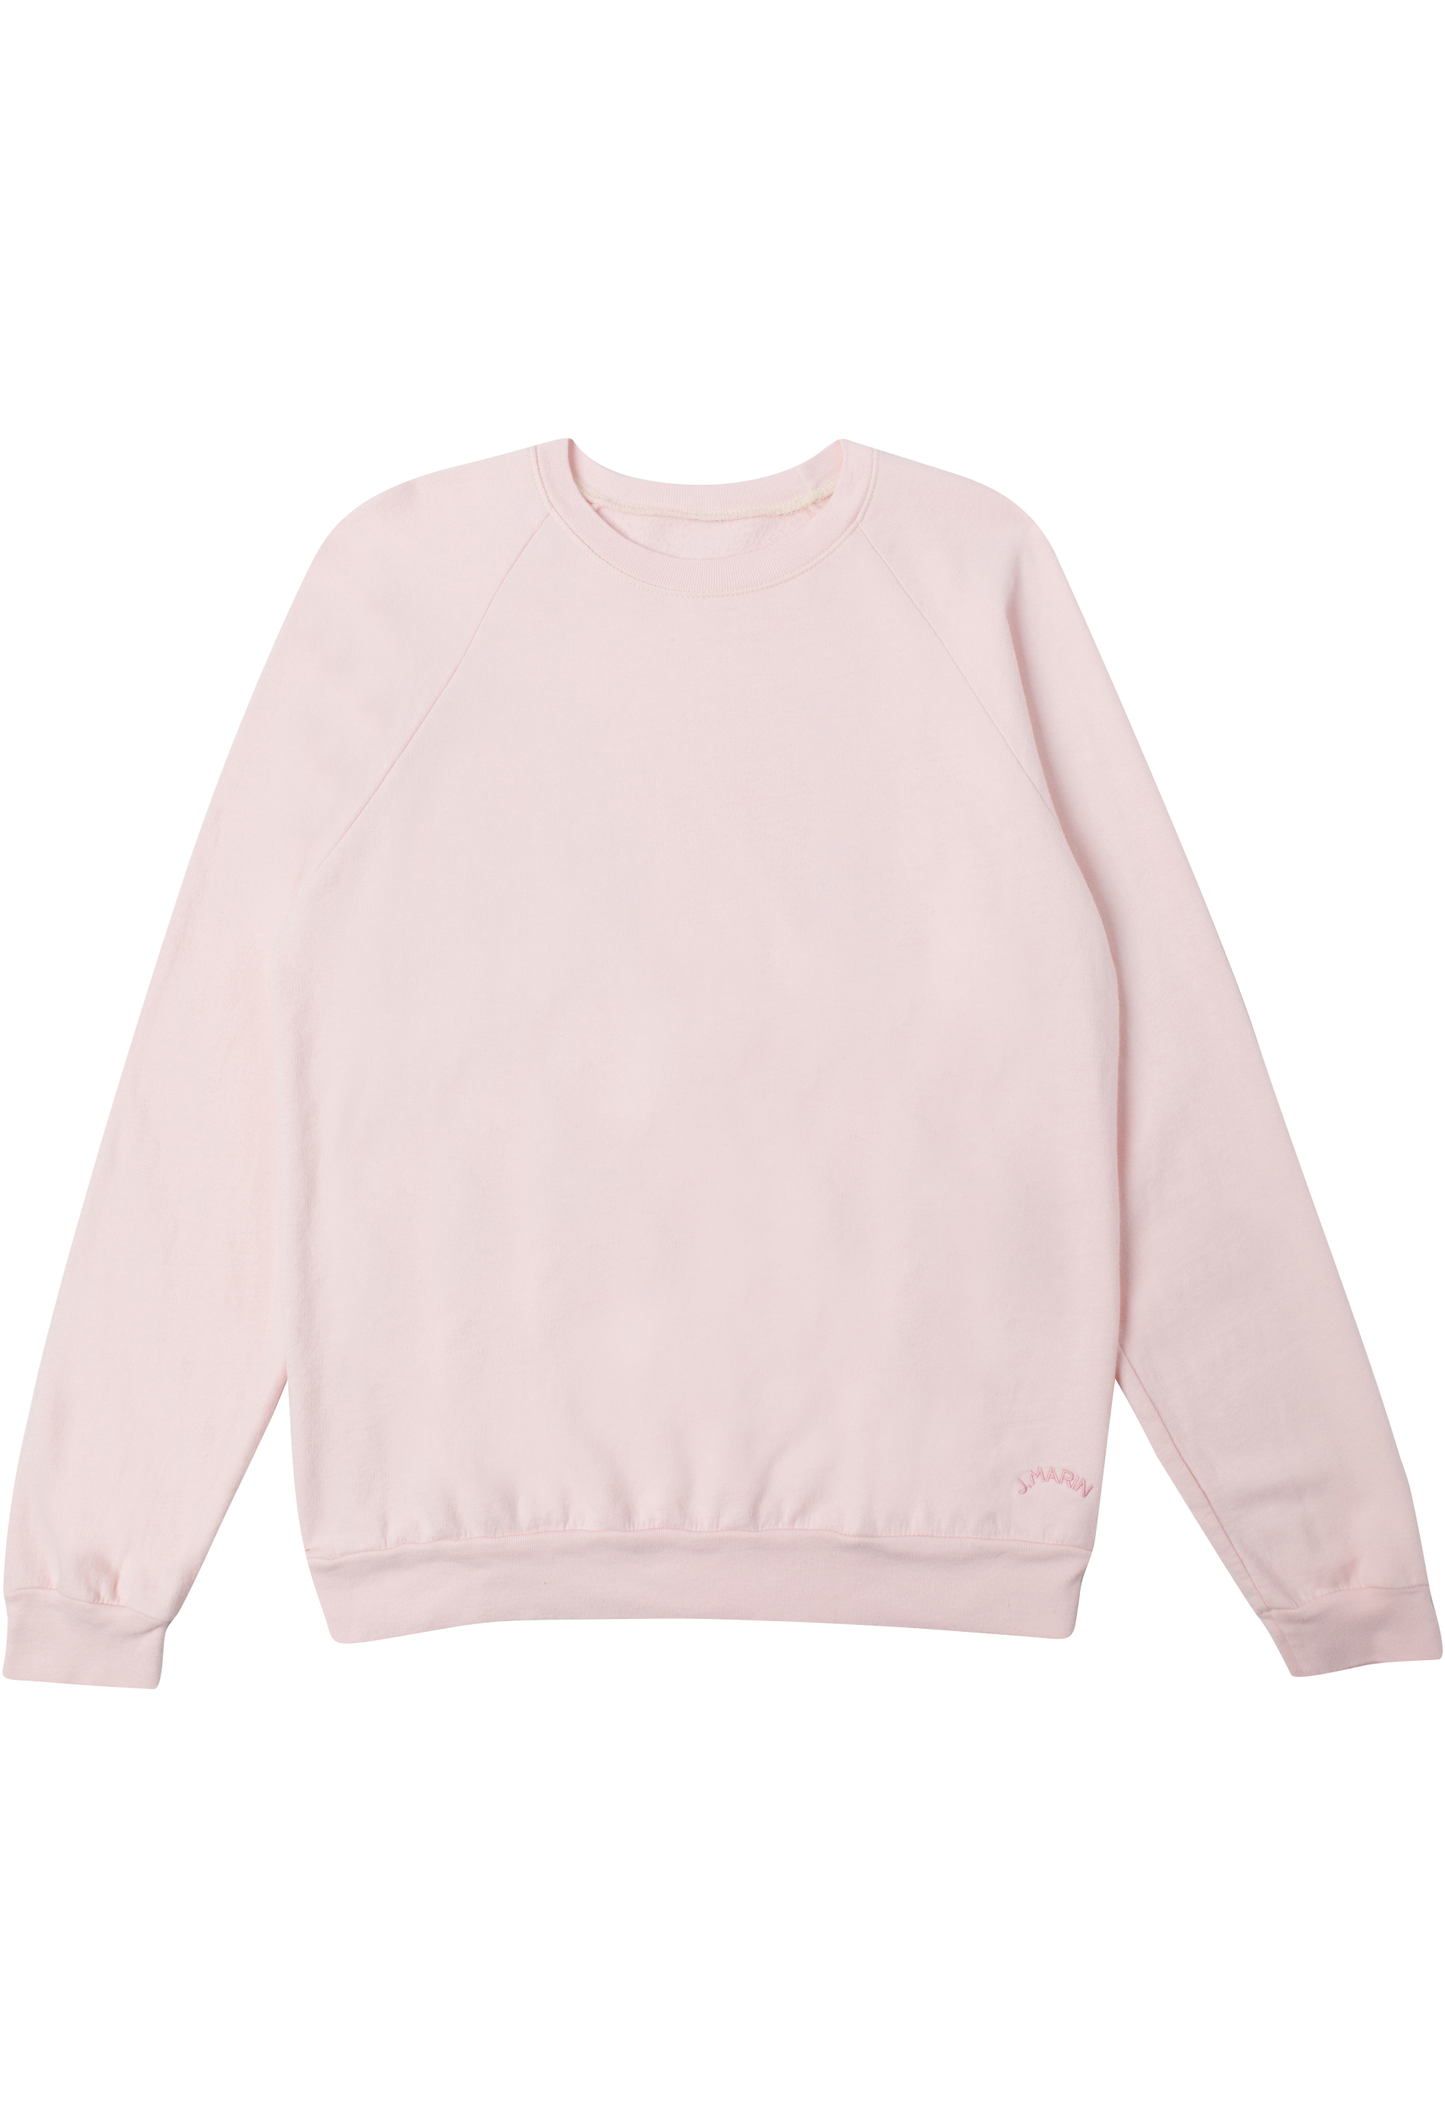 Retro Raglan Gym Sweatshirt - Organic Cotton Hand-Dye - Rosewater Pink - J. Marin